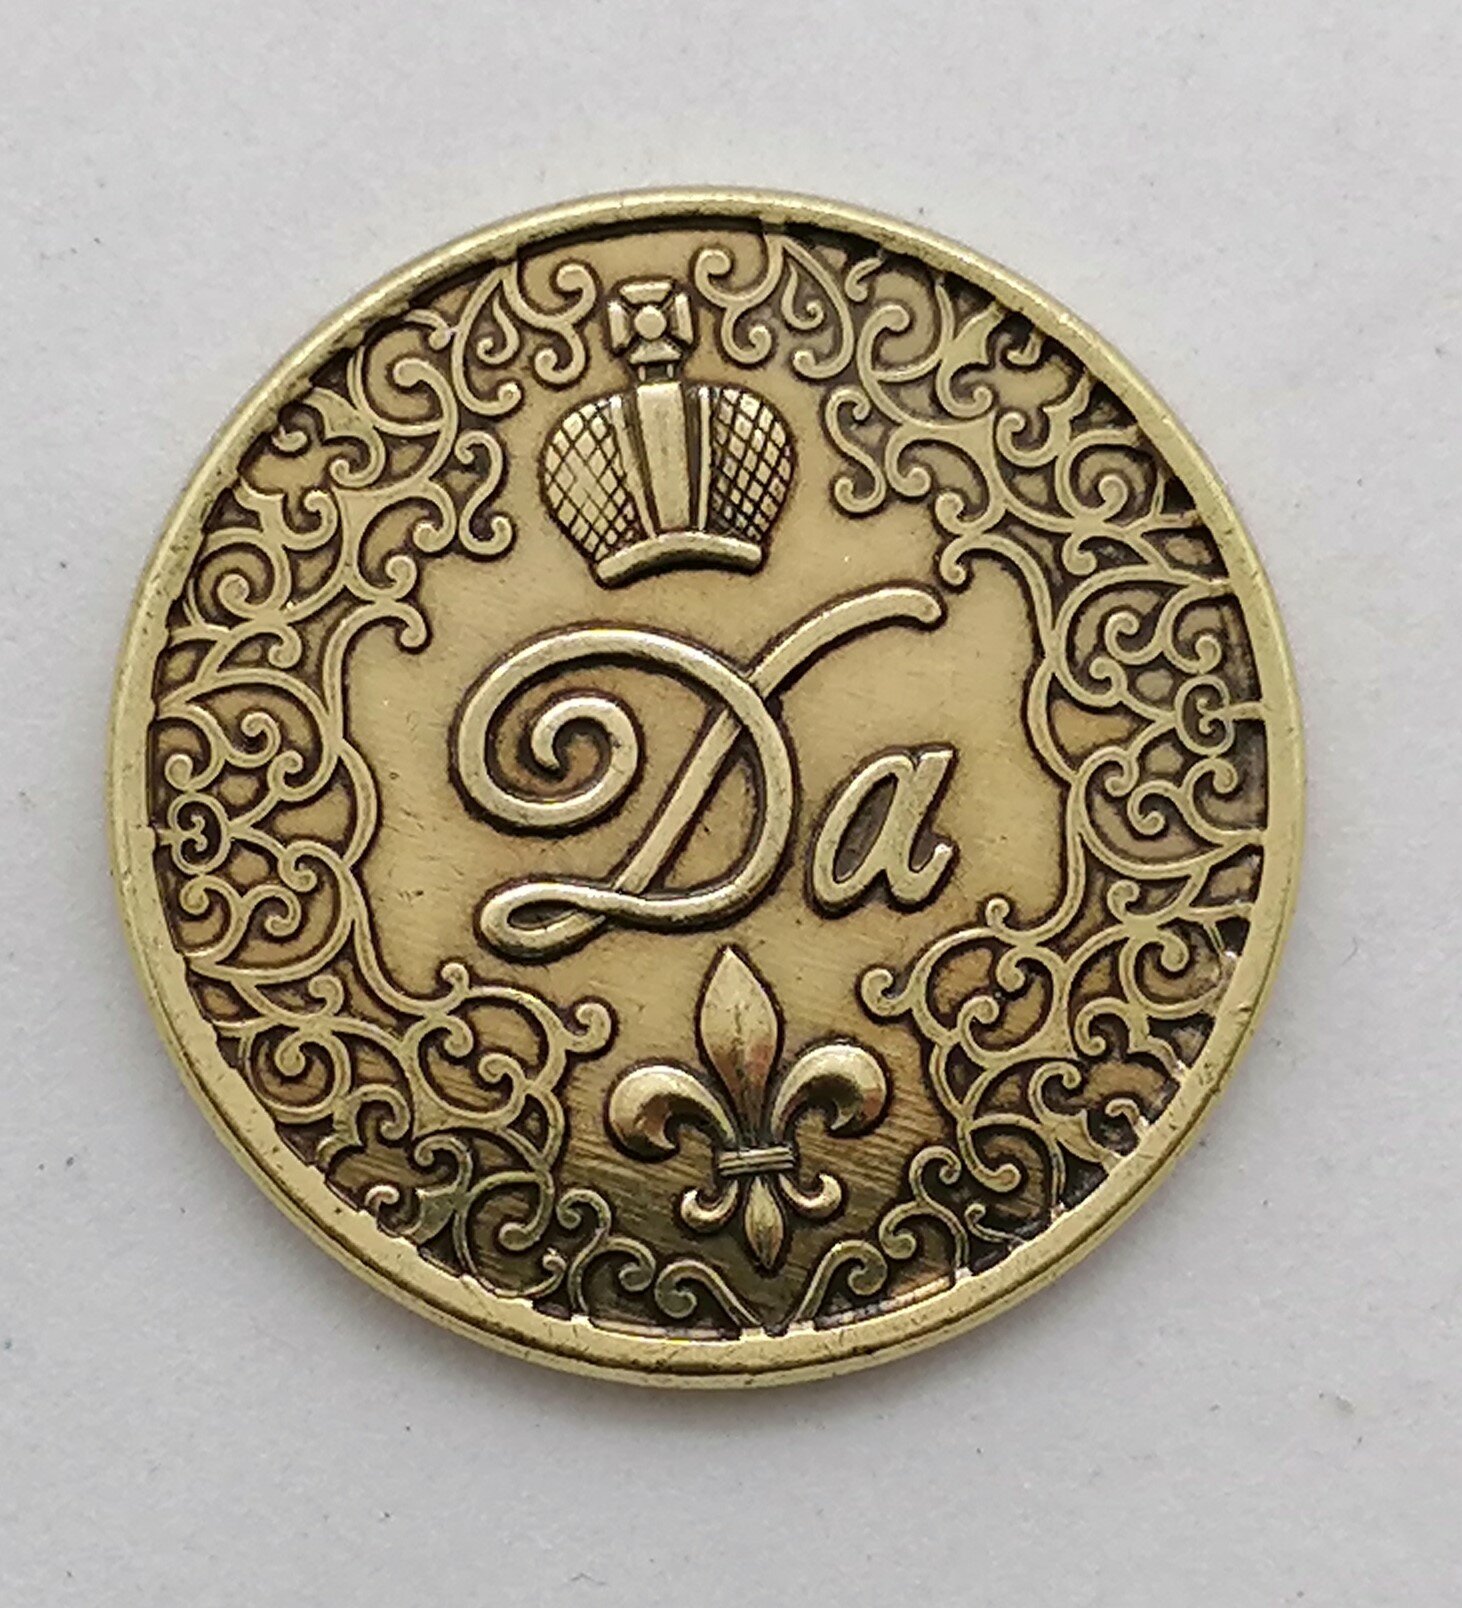 Монета сувенирная " Да-Нет (Корона)"